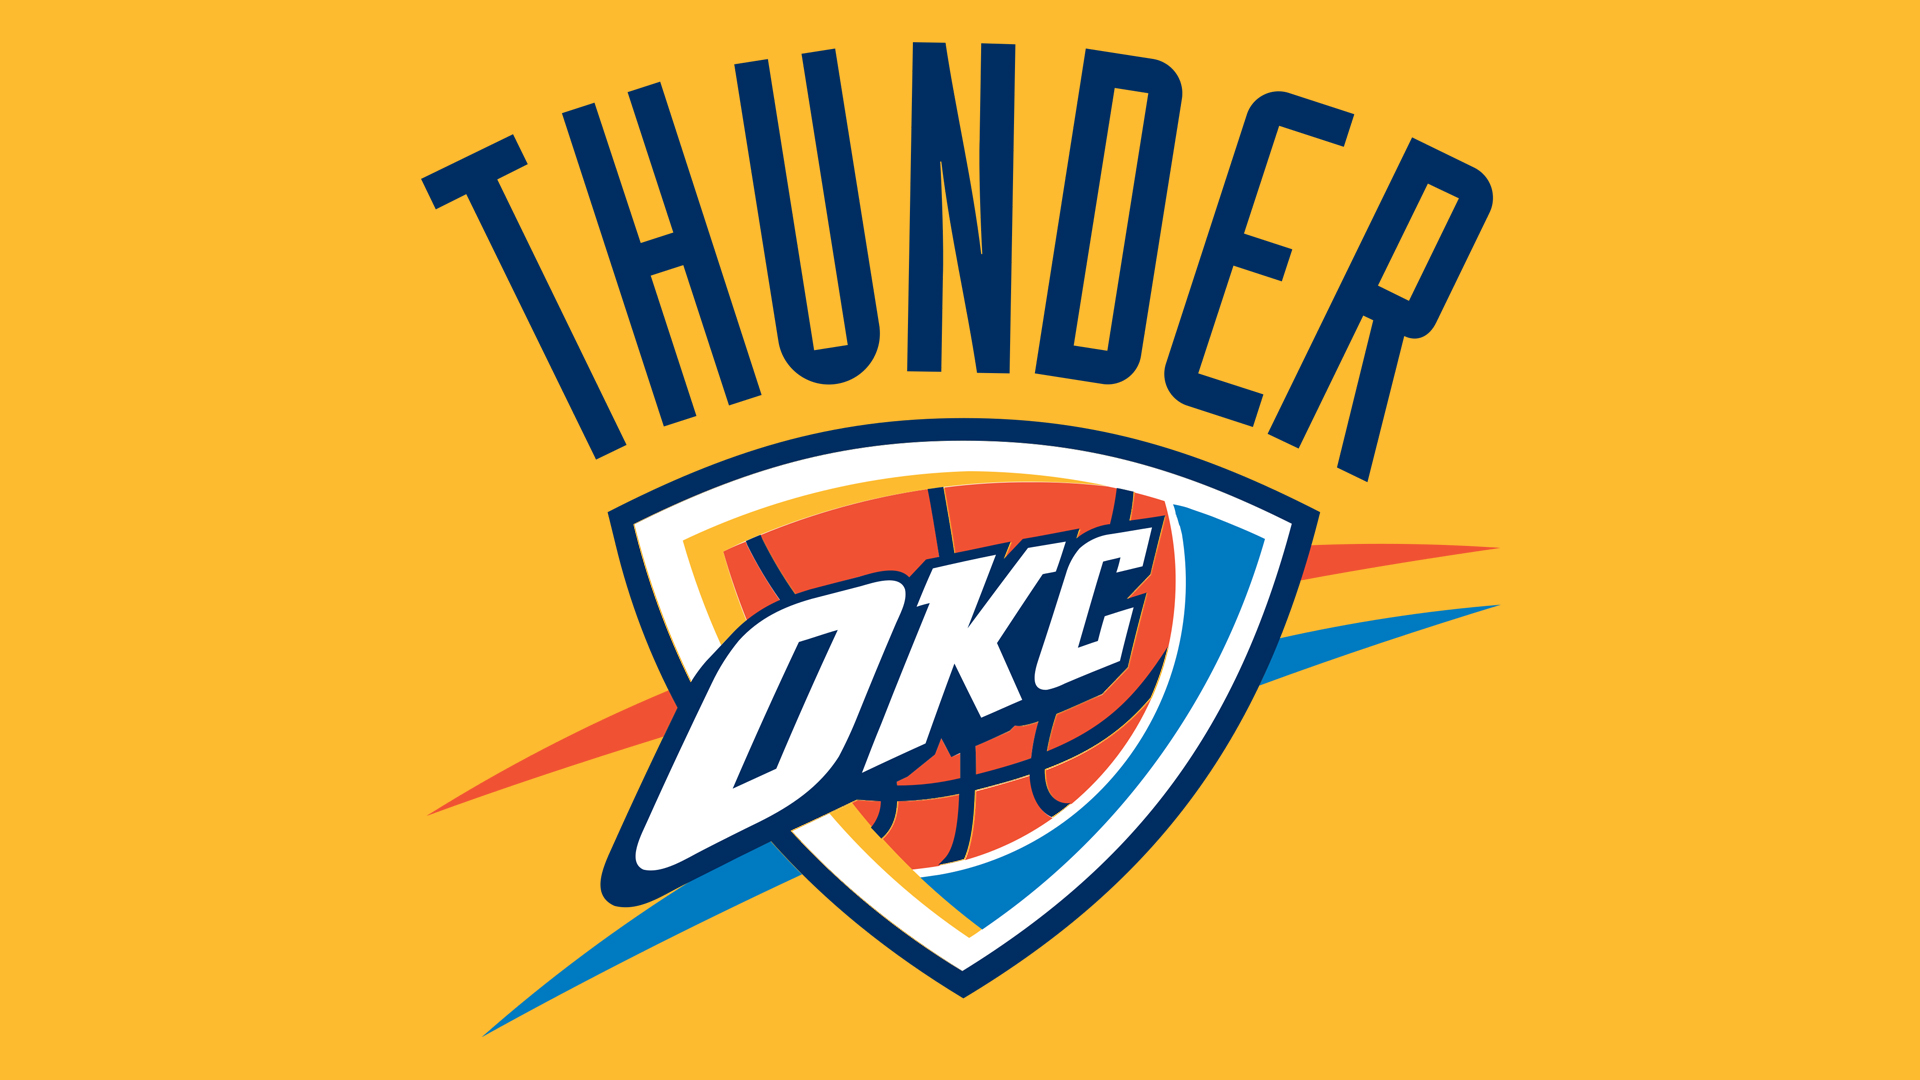 Oklahoma City Thunder HD Wallpaper and Background